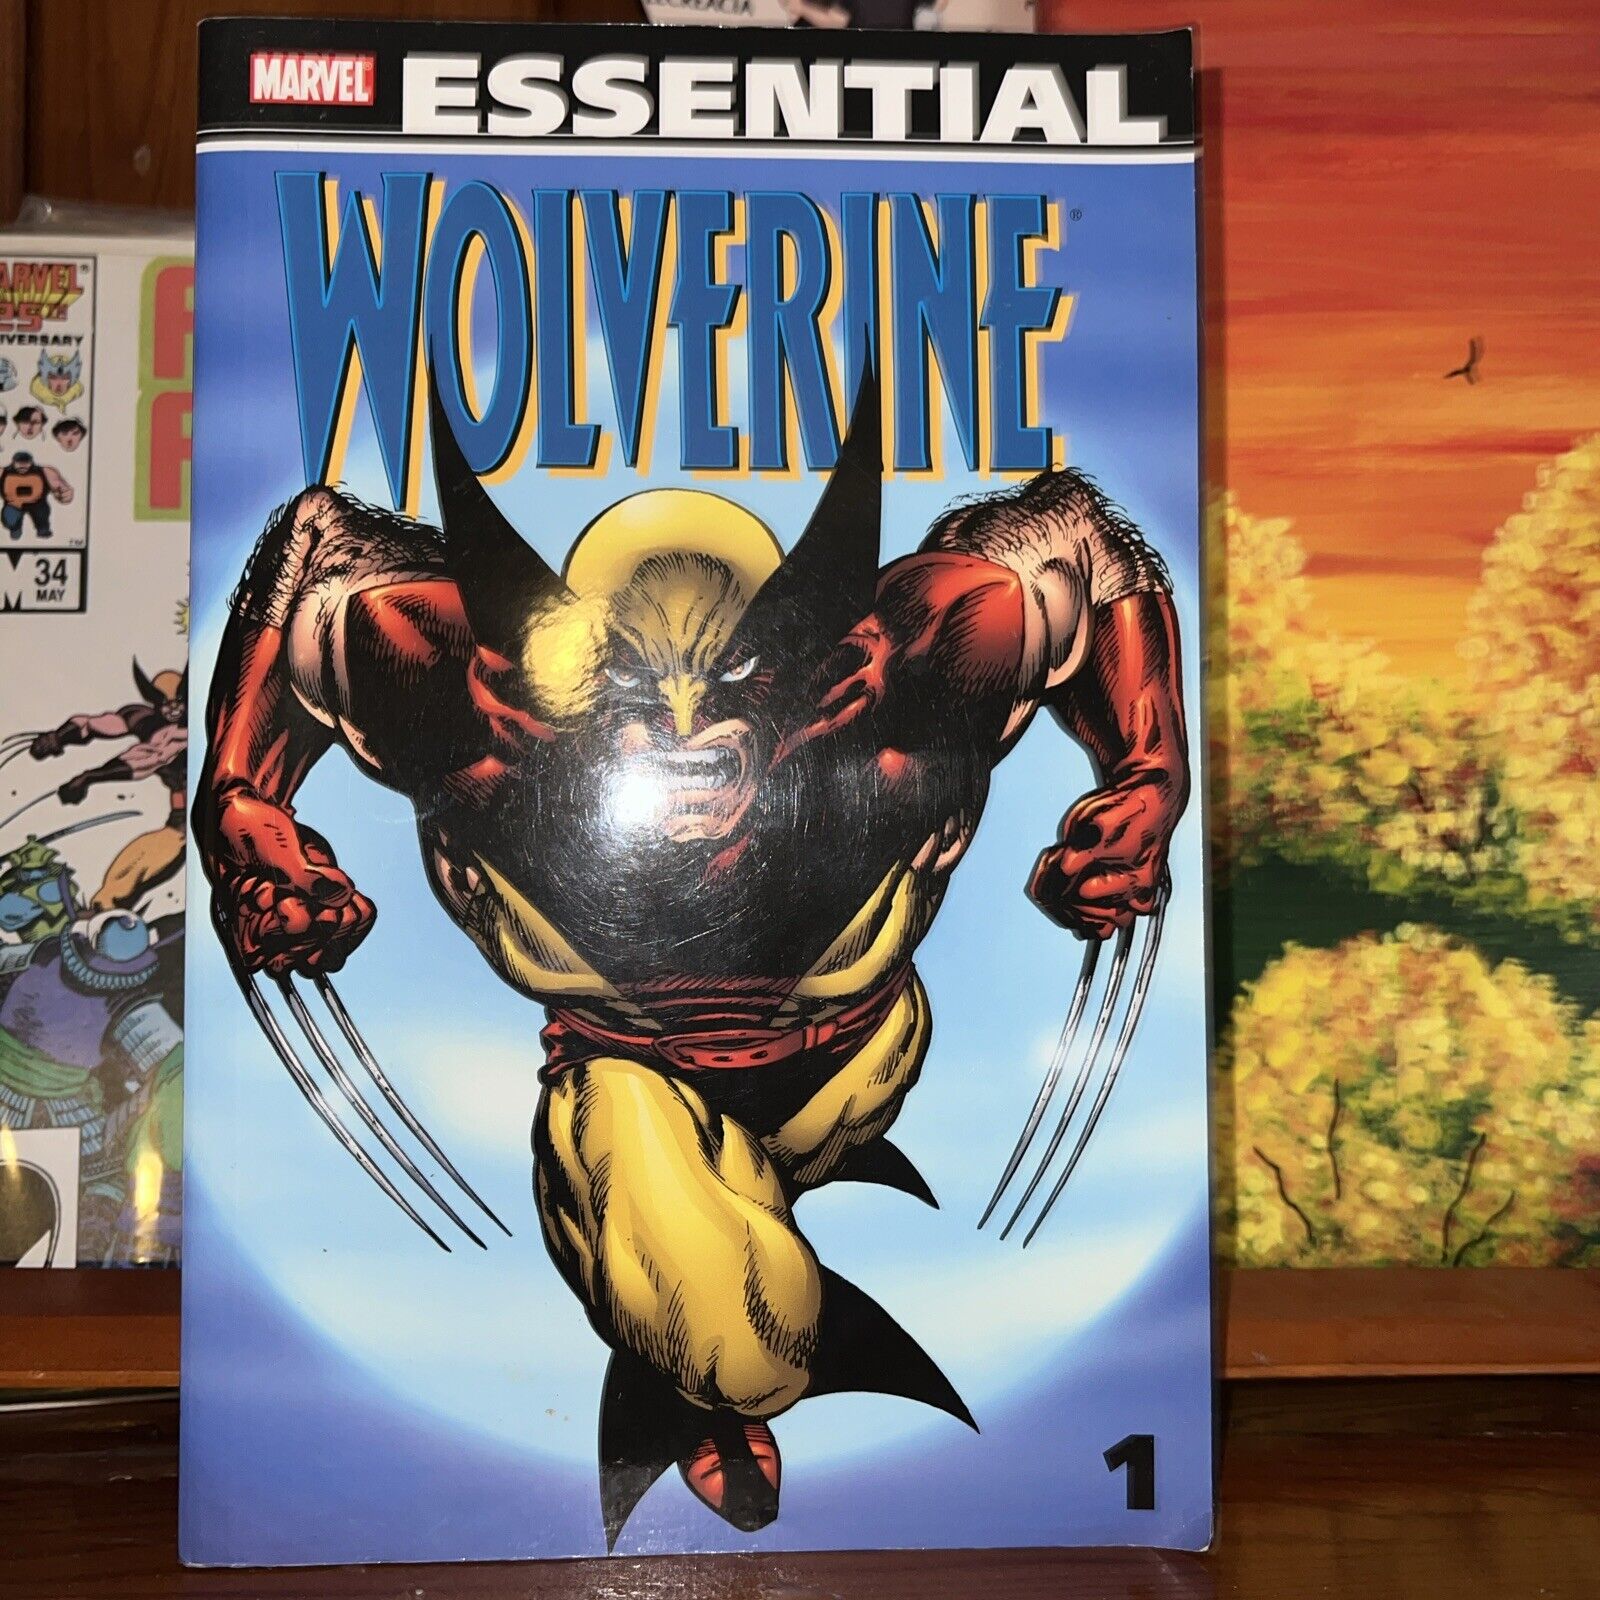 Essential Wolverine #1 (Marvel Comics August 2005)